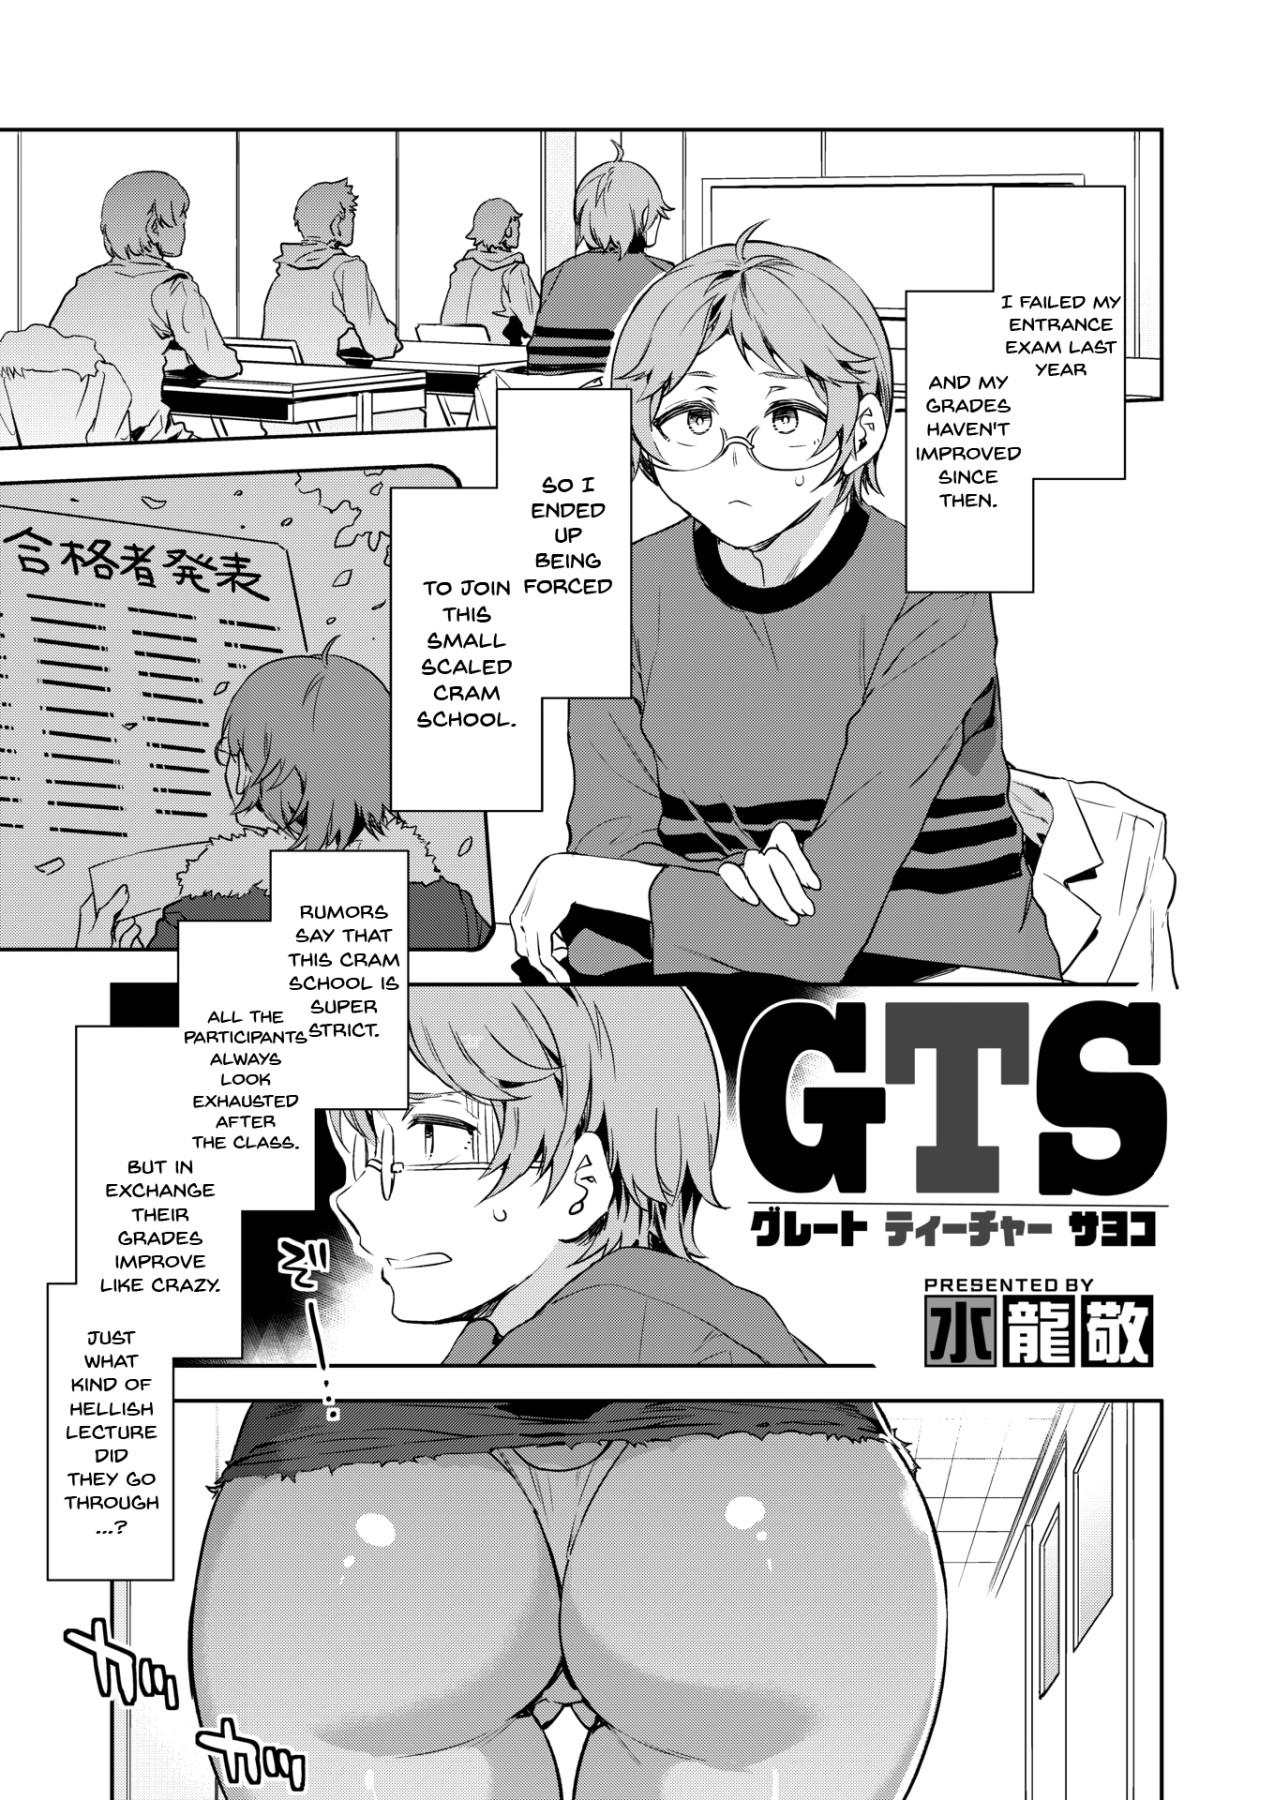 GTS | GTS - Great Teacher Sayoko 0